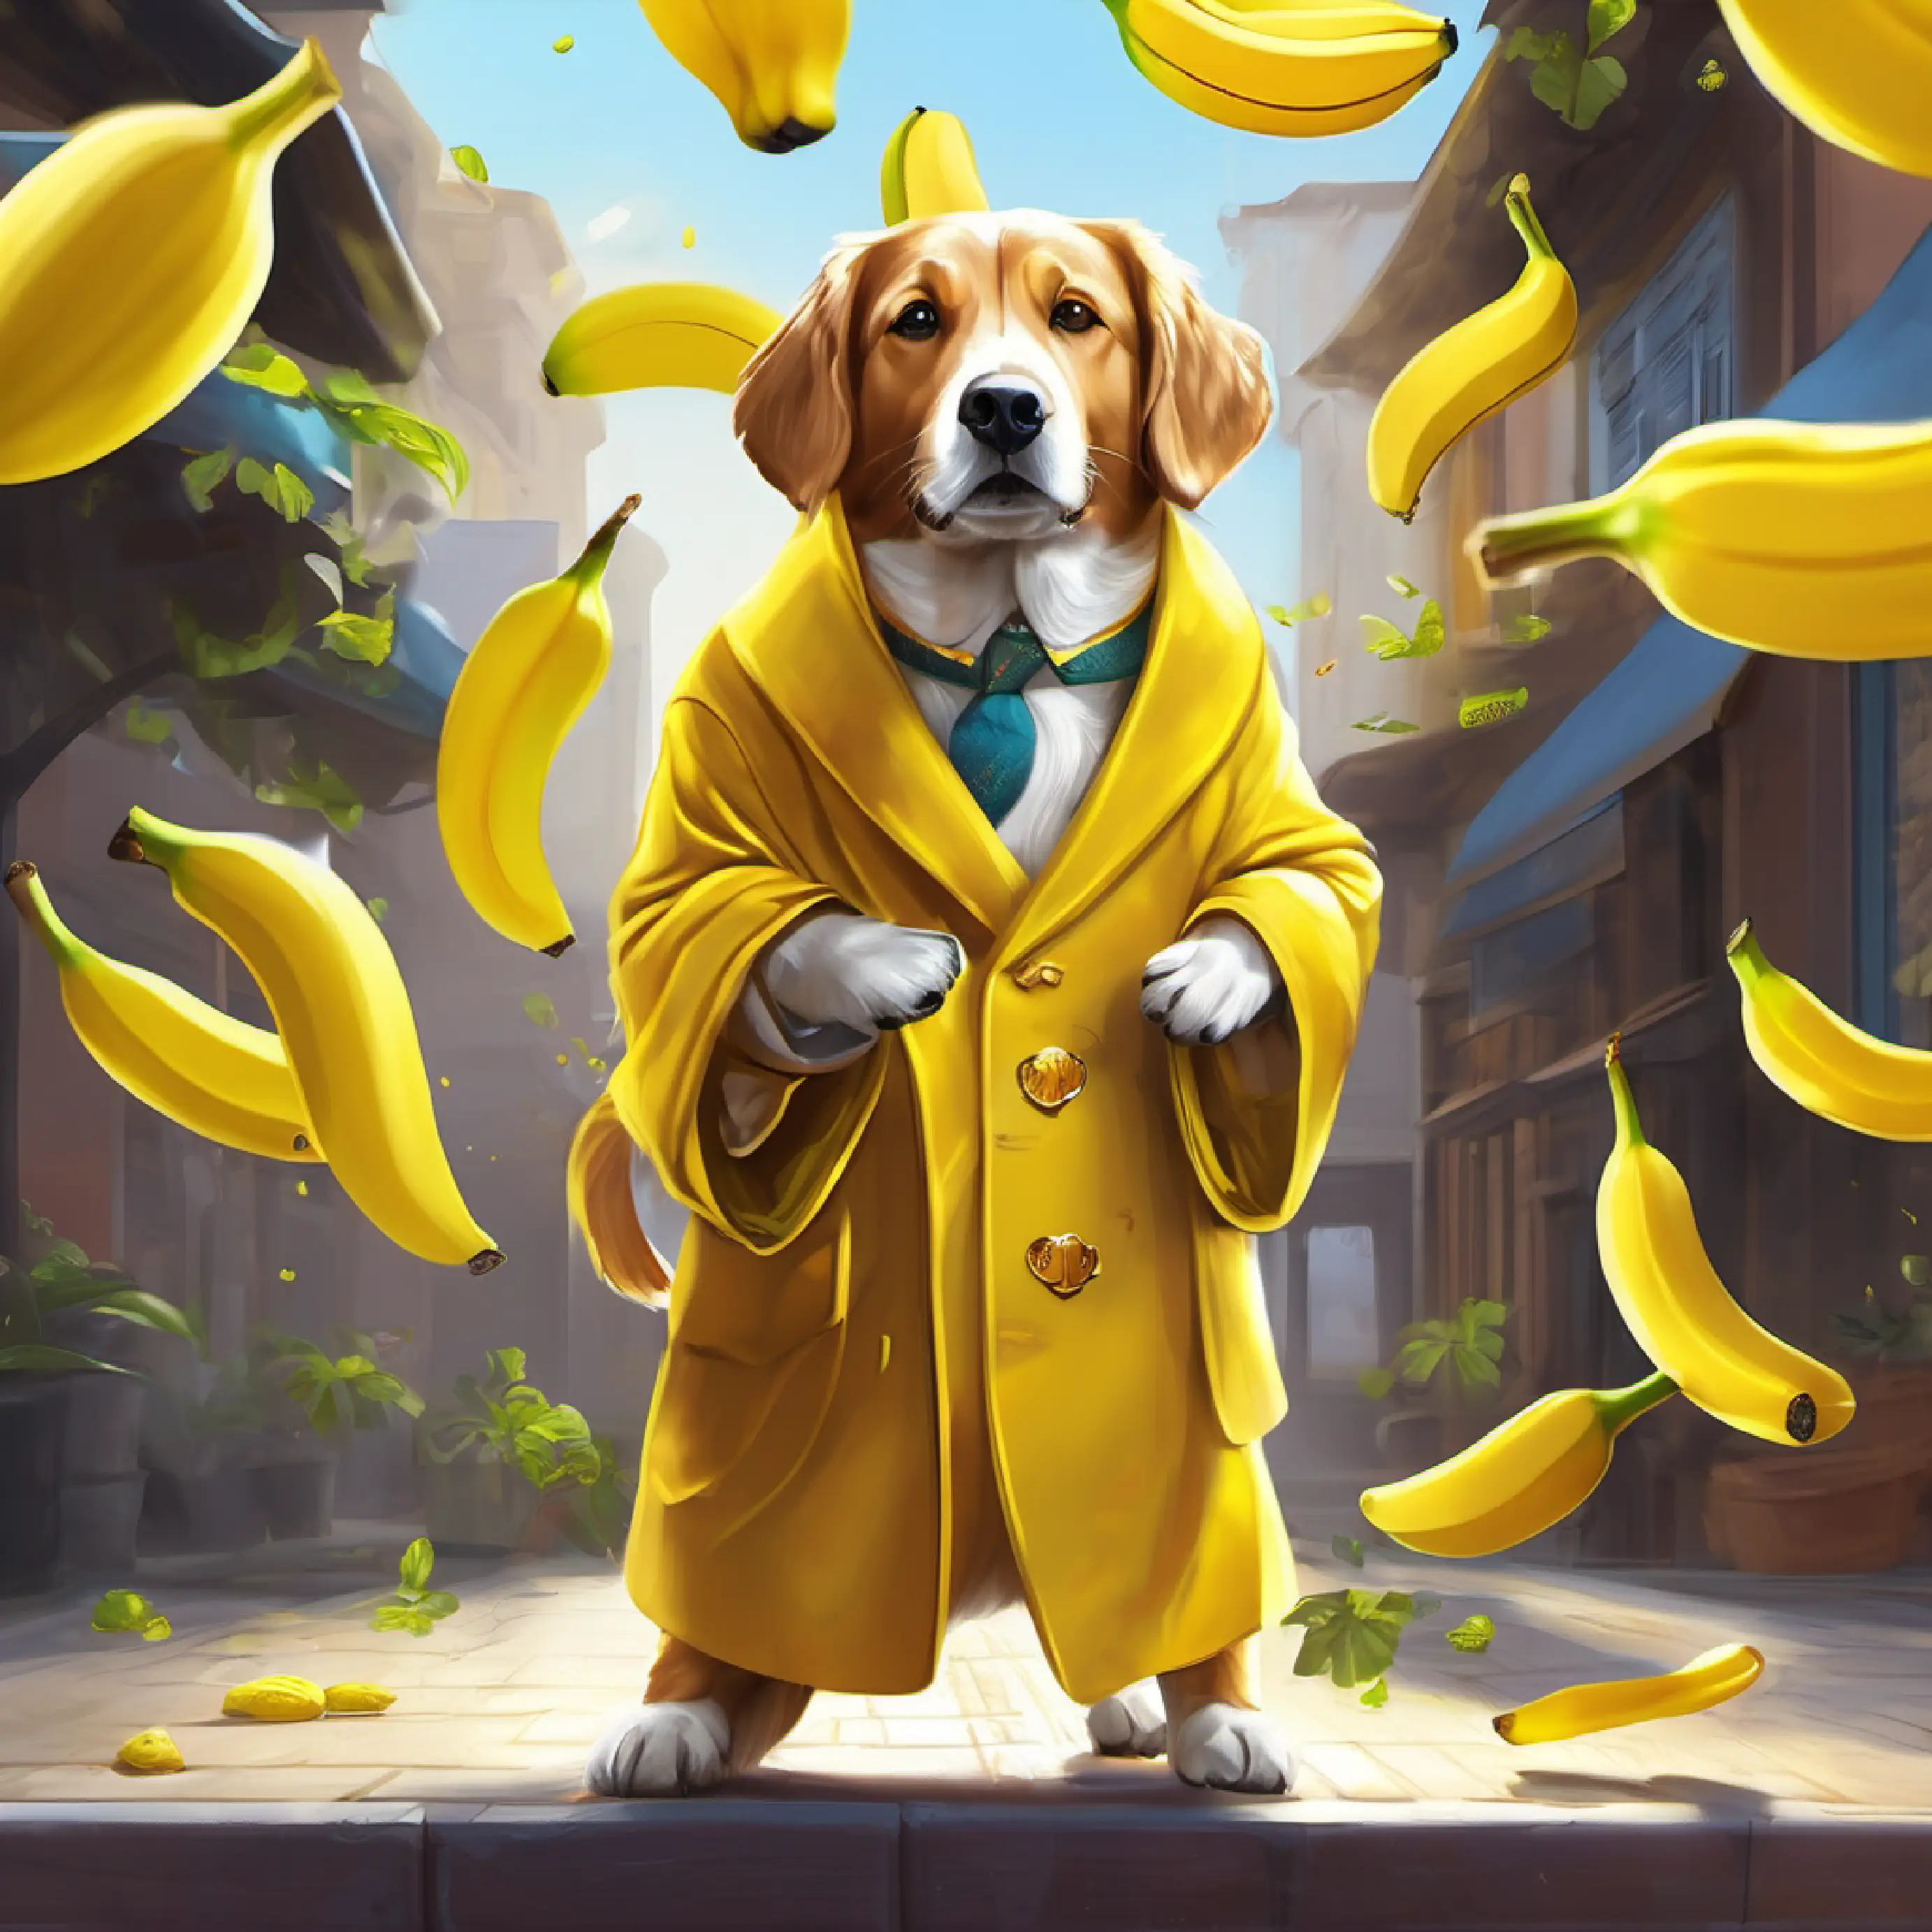 Golden coat, loves bananas, smart dog counts hops with banana peels.